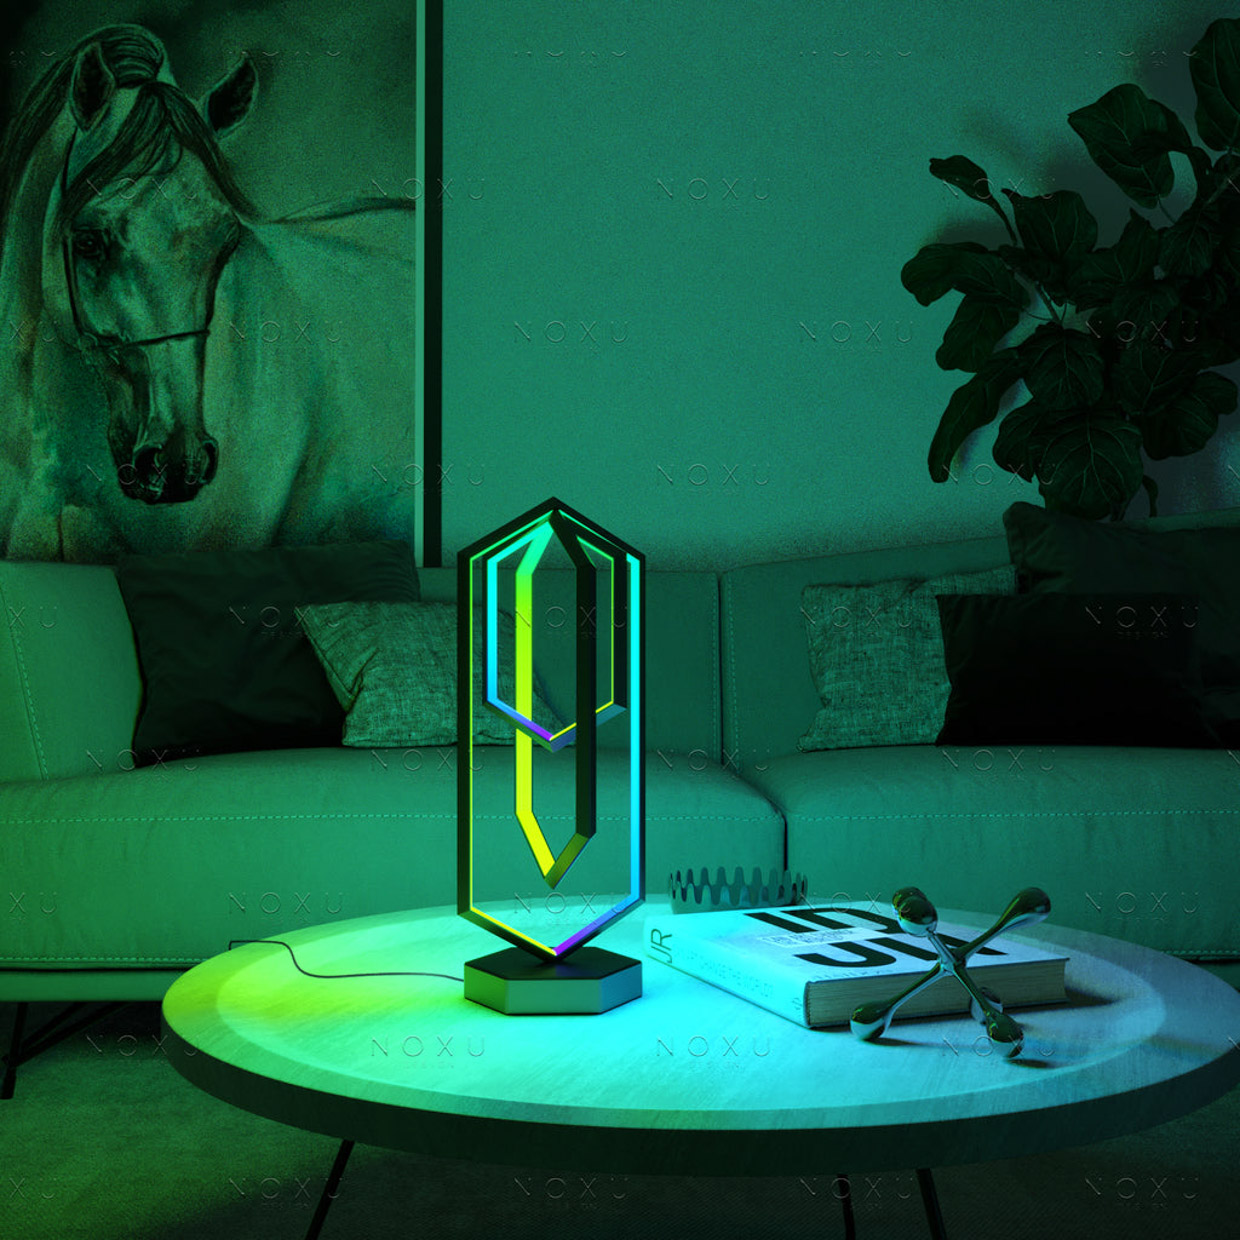 NOXU X7.0 Smart Table Lamp